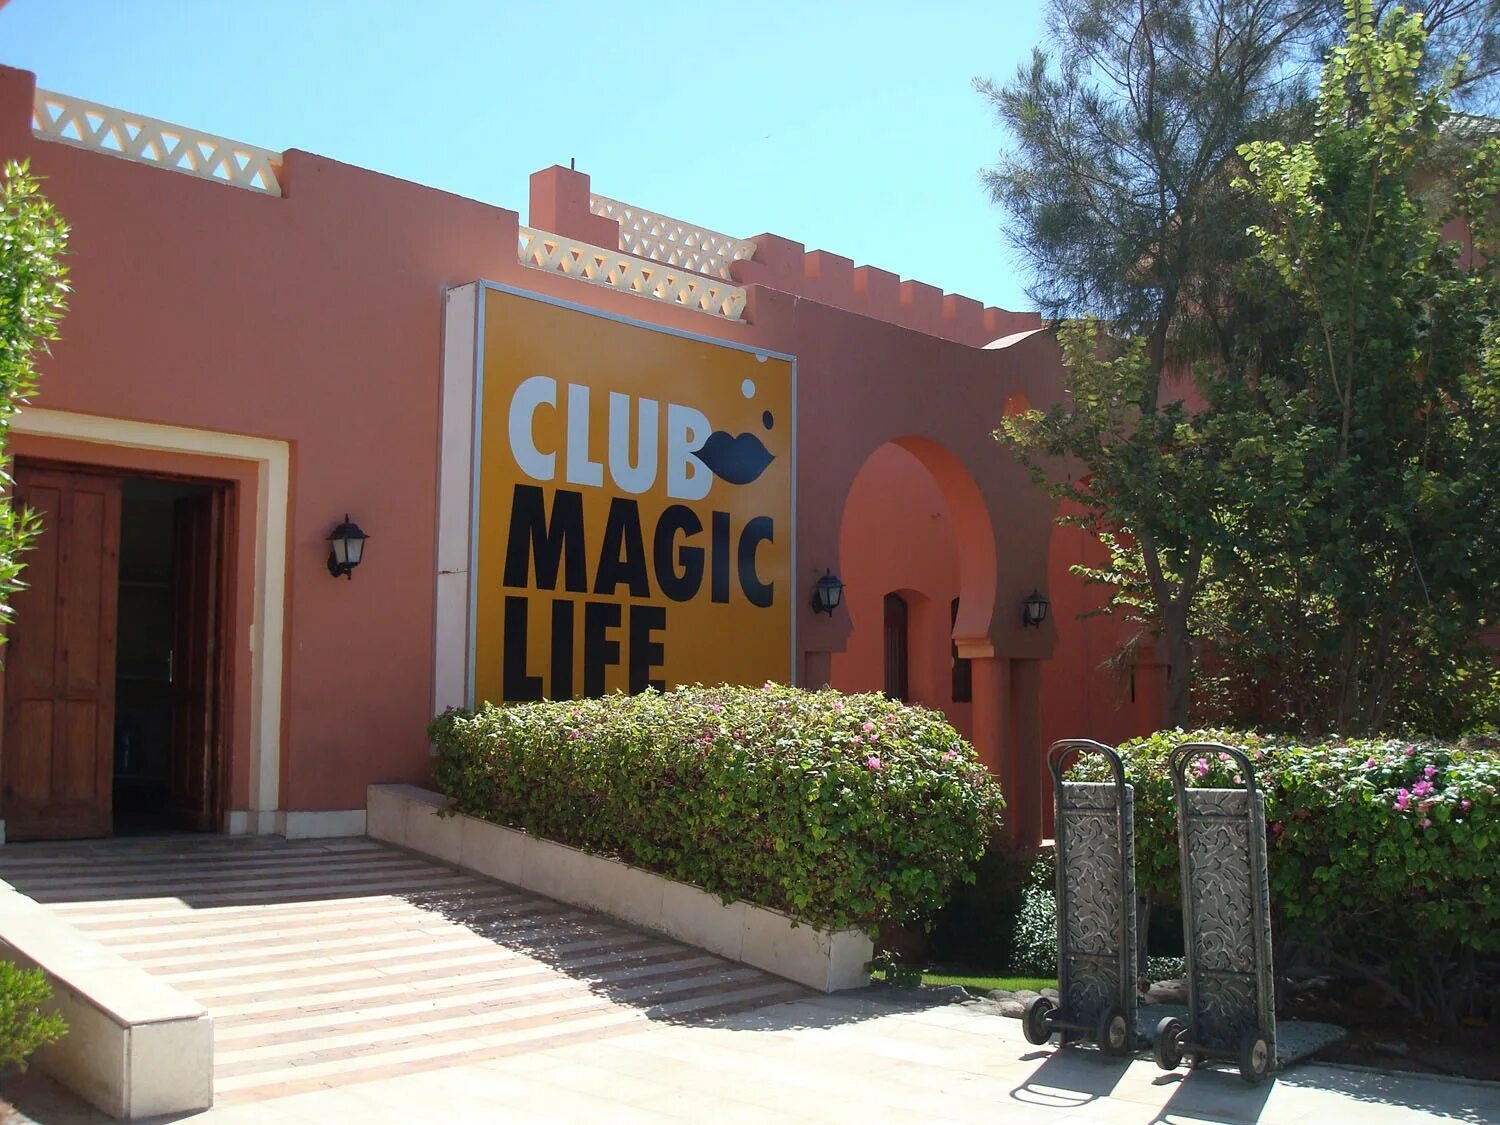 Magic world club by jaz